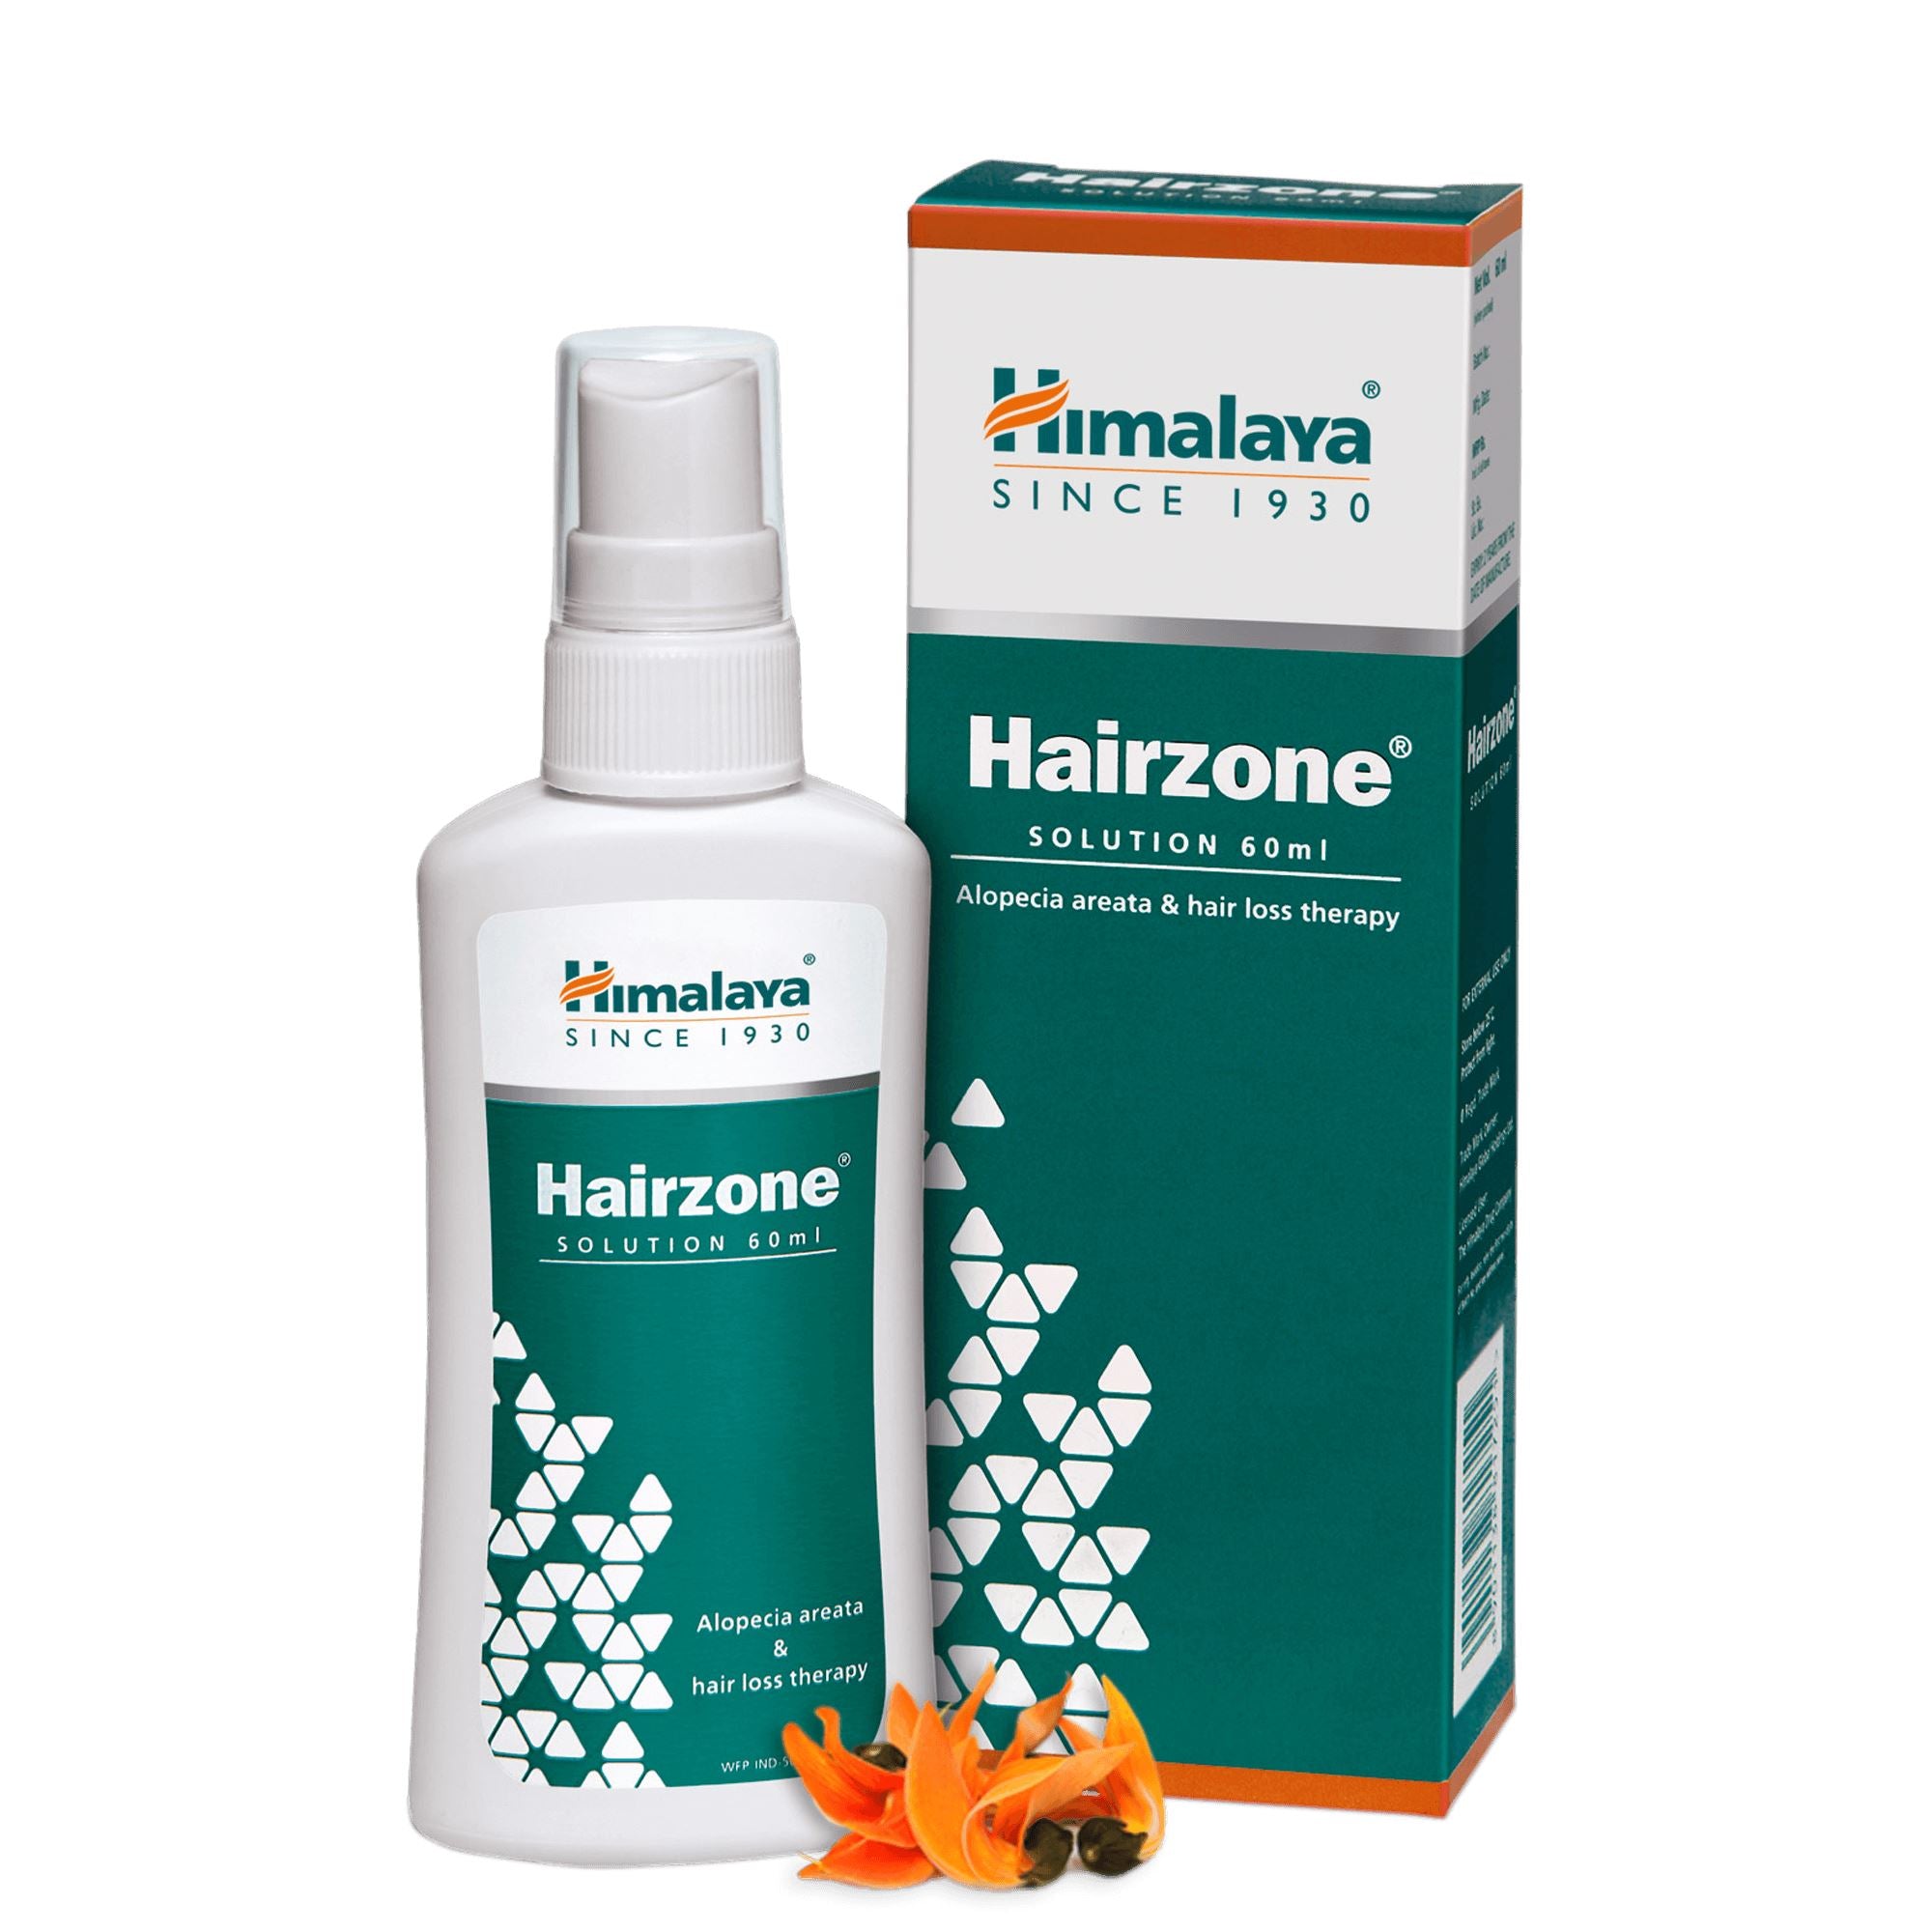 Недорогое средство от выпадения волос. Hairzone solution 60. Хэйрзон hairzone. Himalaya since 1930. Средство от выпадения волос.